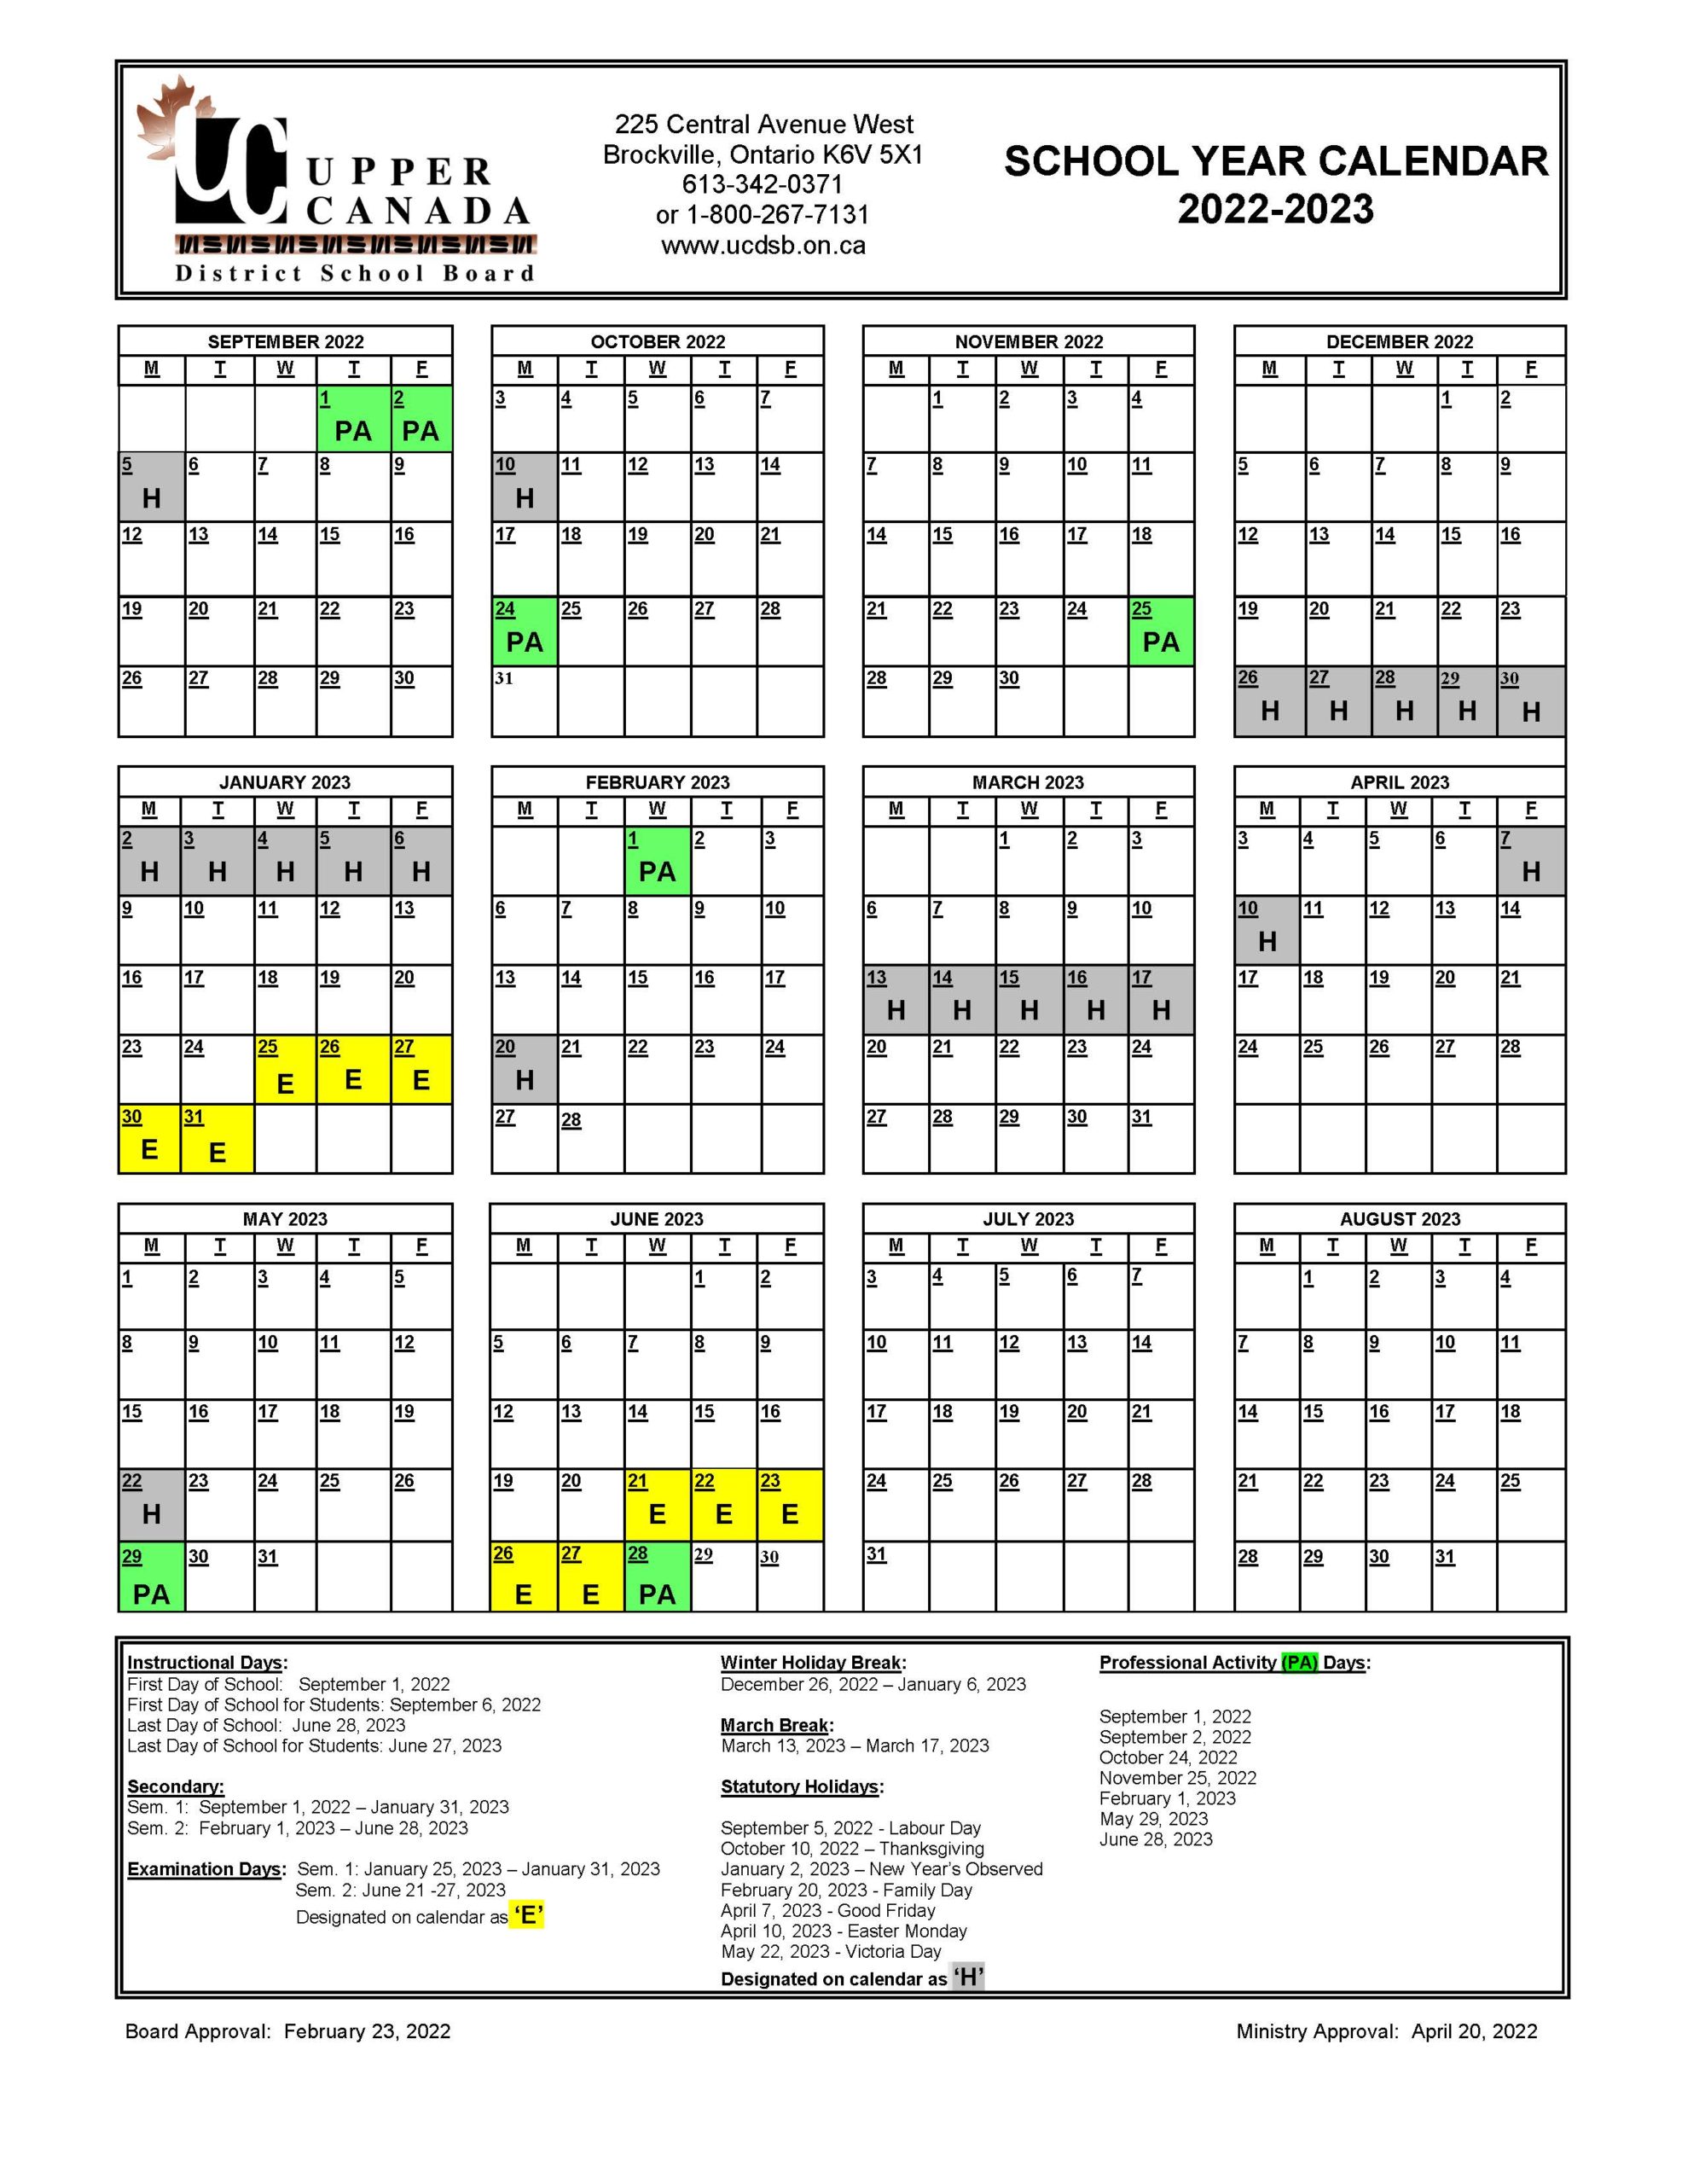 school-calendars-student-transportation-of-eastern-ontario